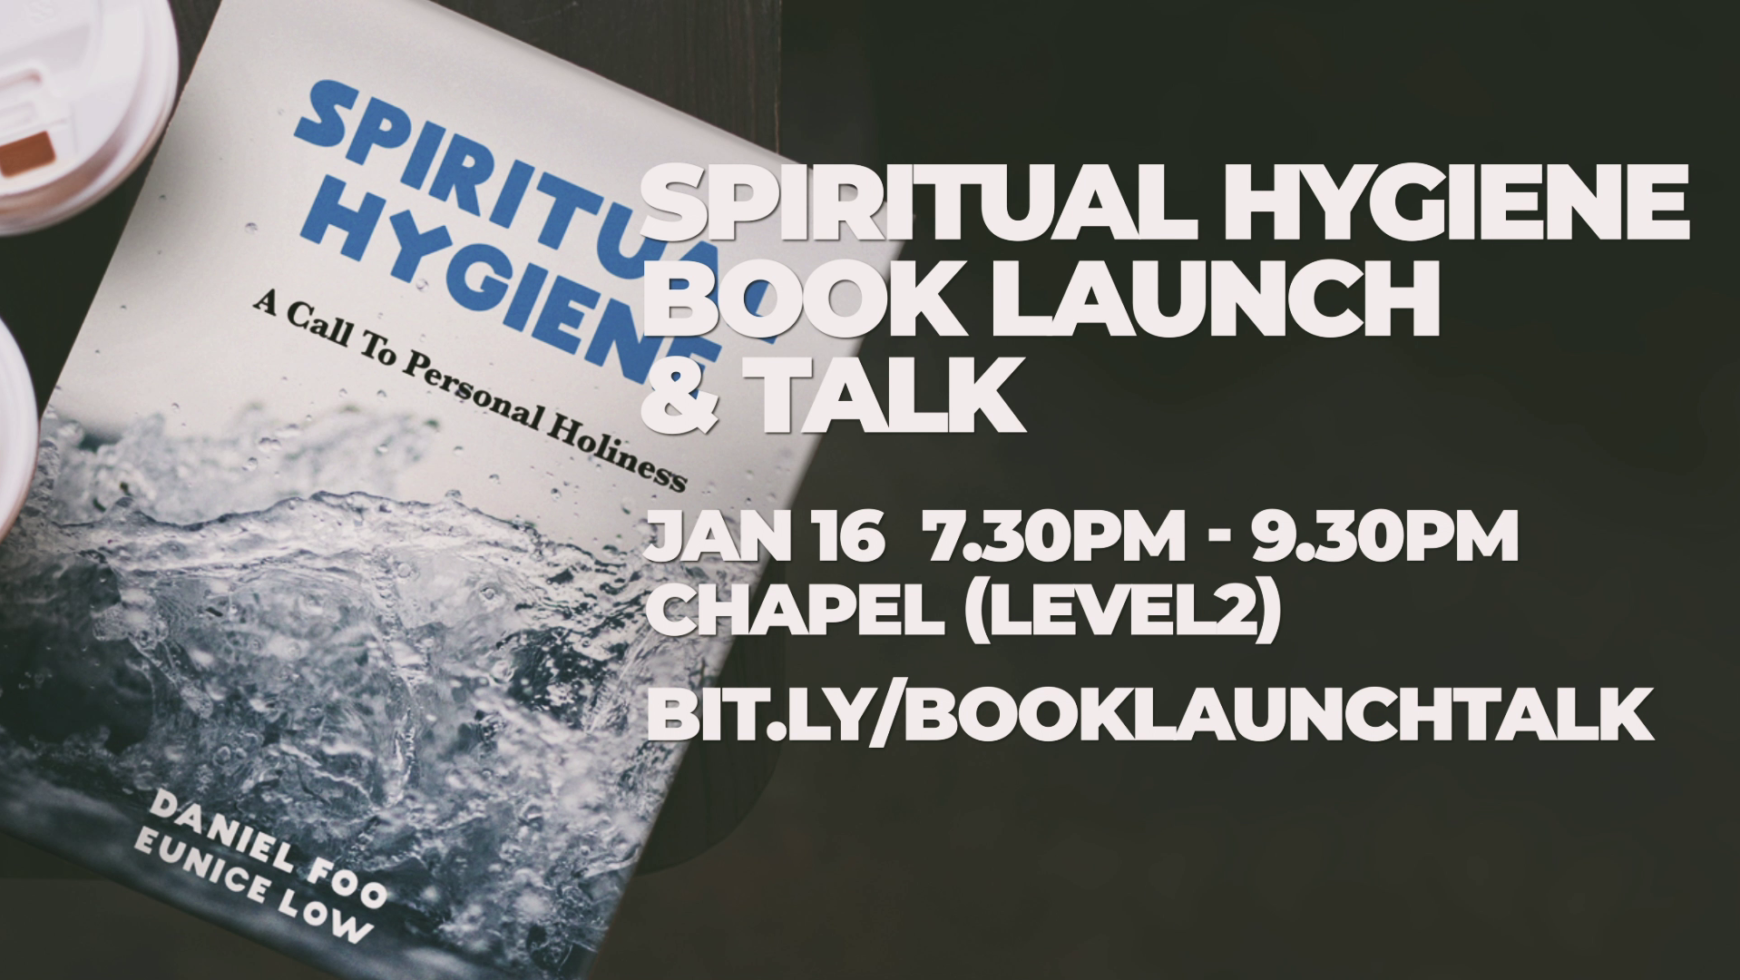 BOOK TALK FOR SPIRITUAL HYGIENE